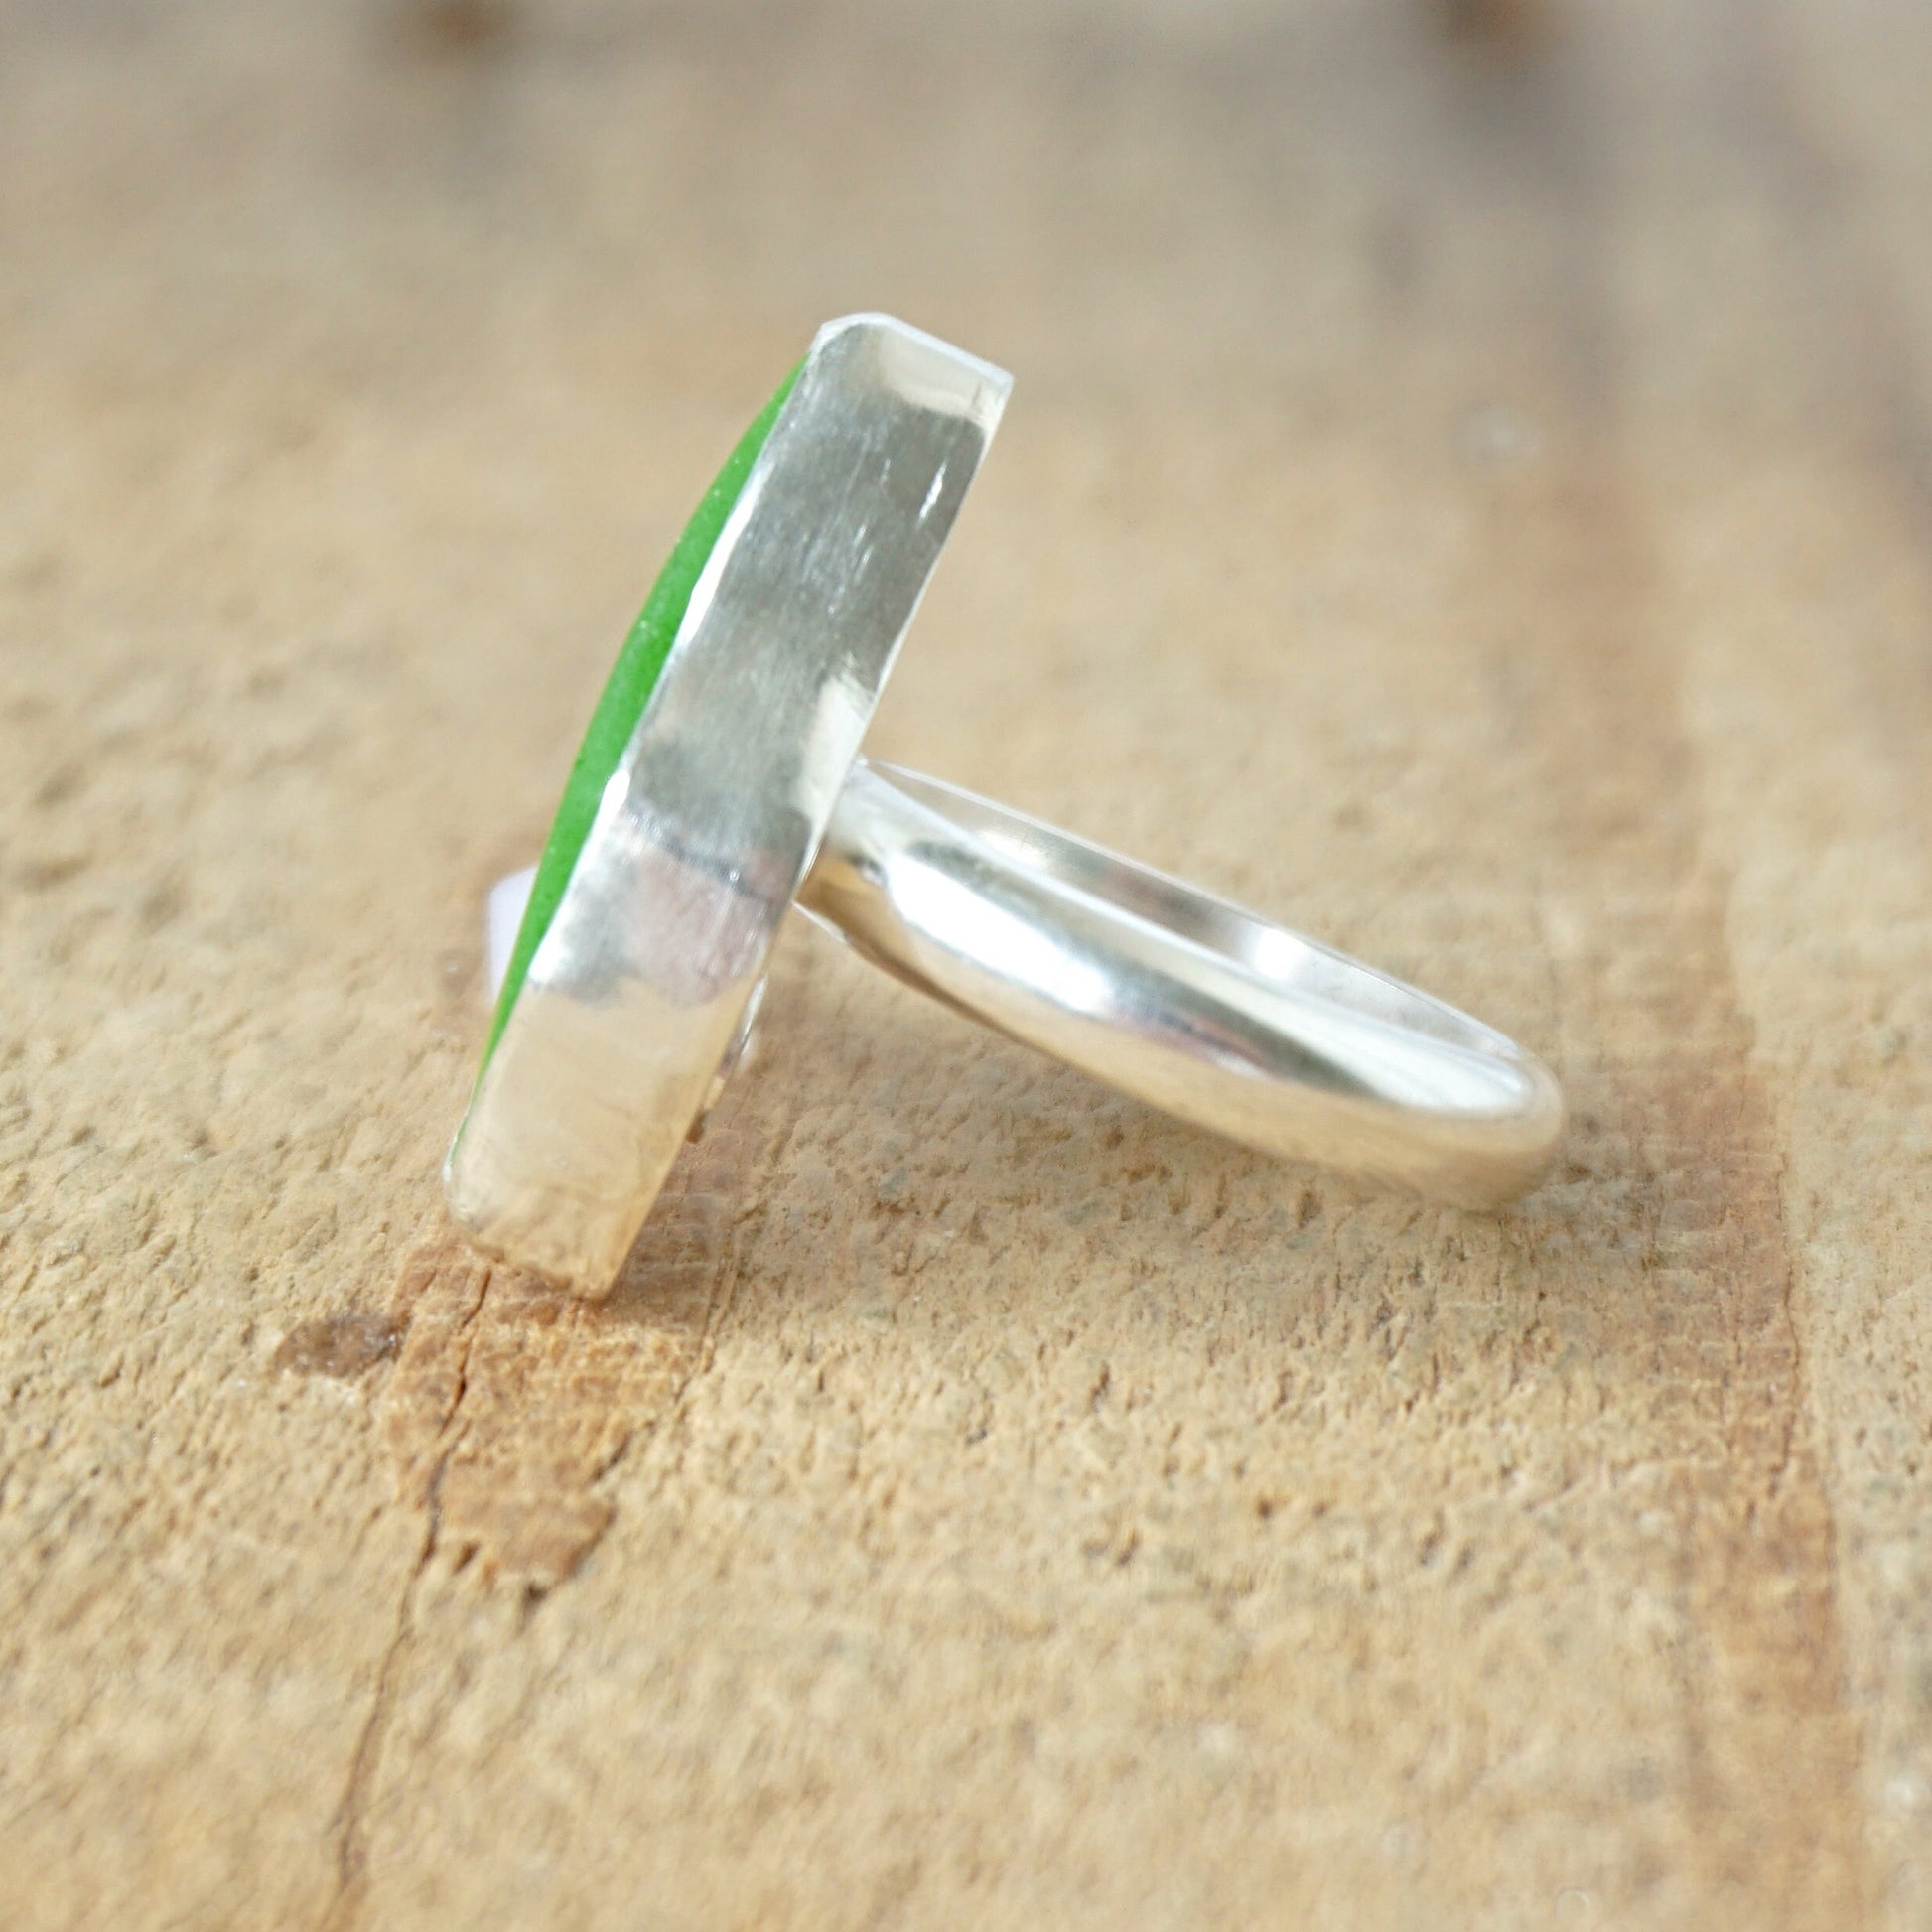 Size 8 1/4 Lime Green Sea Glass Ring - Genuine Sea Glass, Sea Glass Jewelry, Beach Glass, Beach Glass Jewelry, Beach Glass Ring